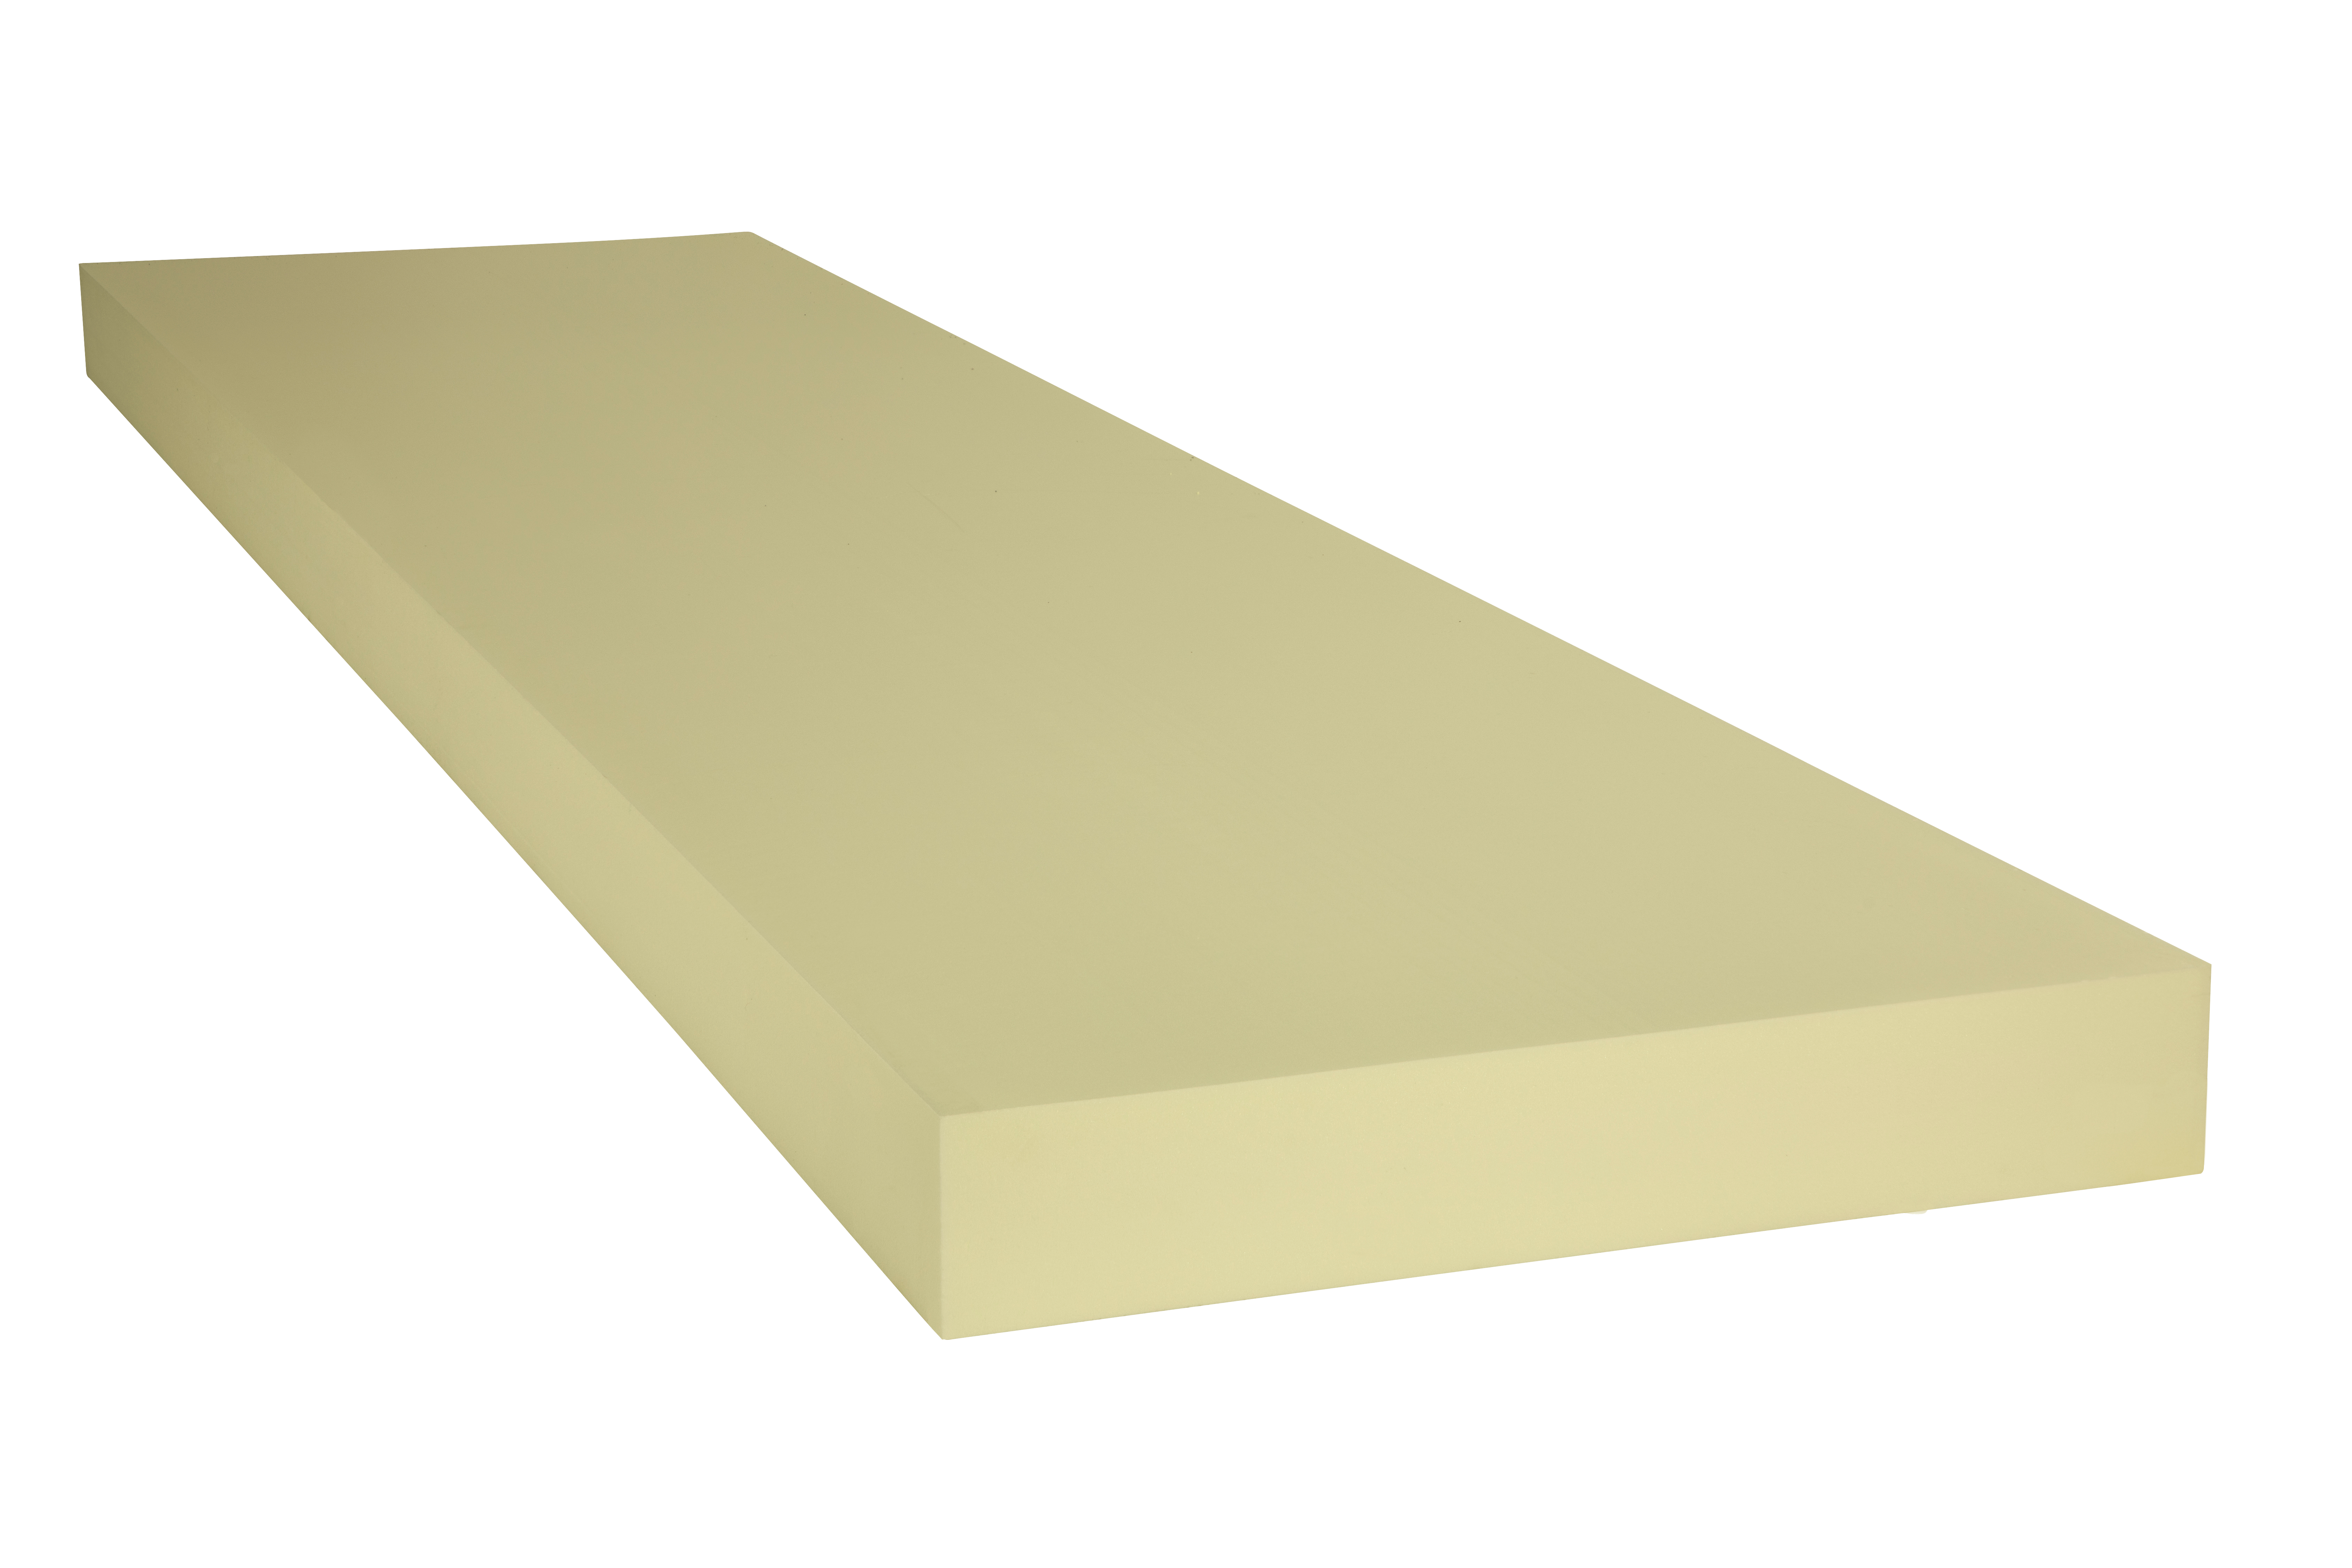 Styrodur Panels, Thickness 2.0 cm, Width 56 cm, Length 117 cm, Pack of 5,  Model Building Panels, Insulation Panels : : DIY & Tools